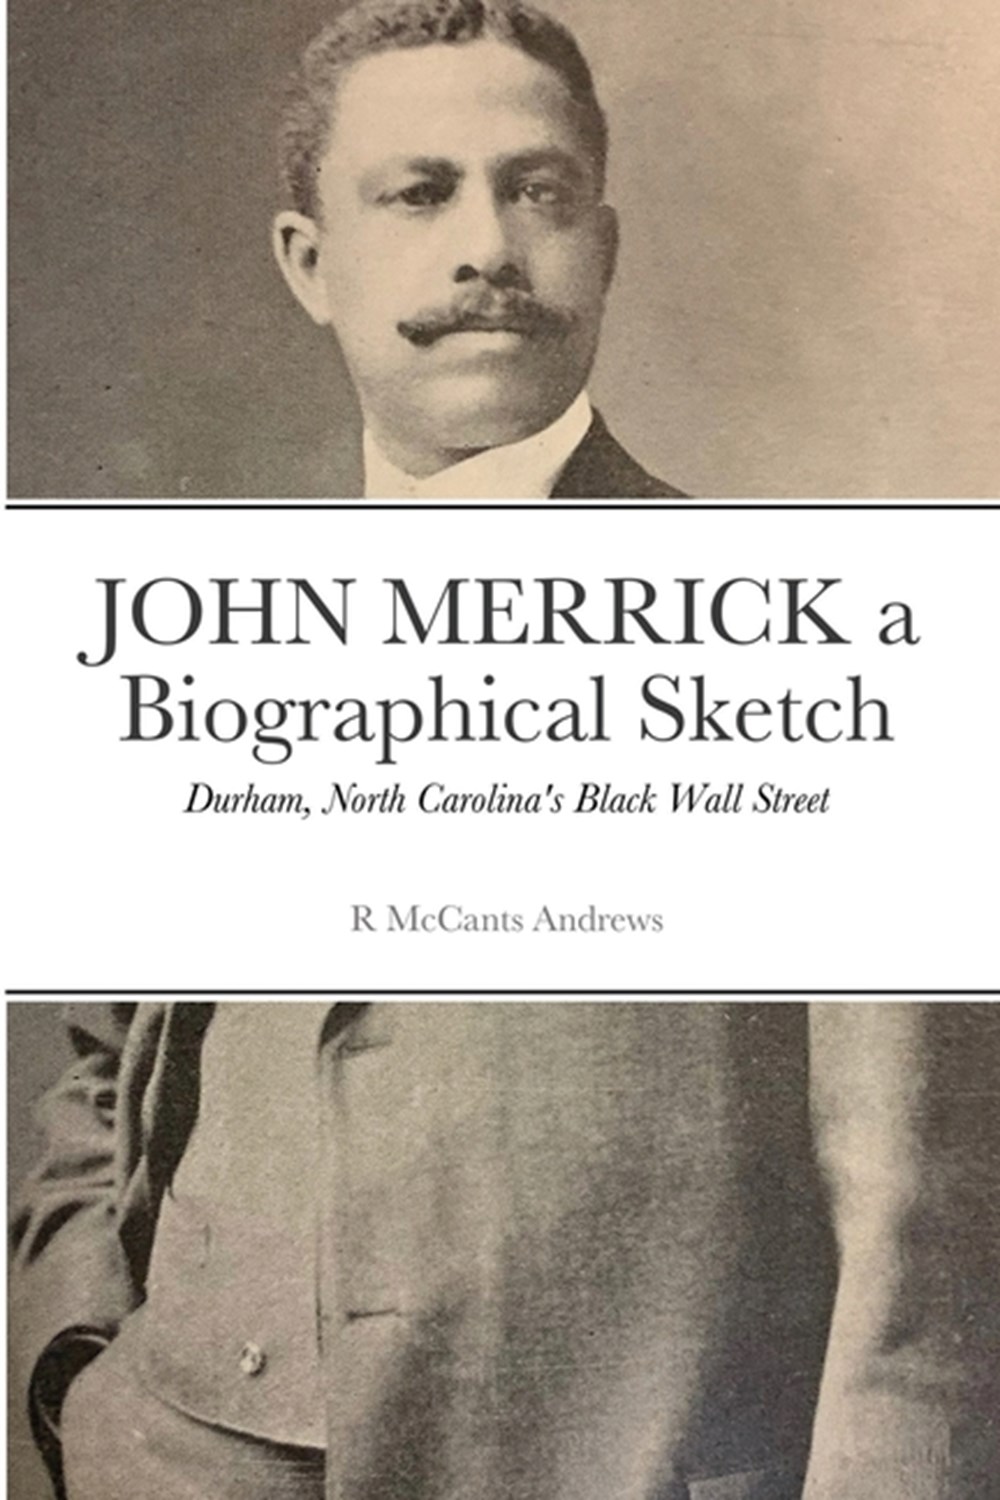 JOHN MERRICK a Biographical Sketch